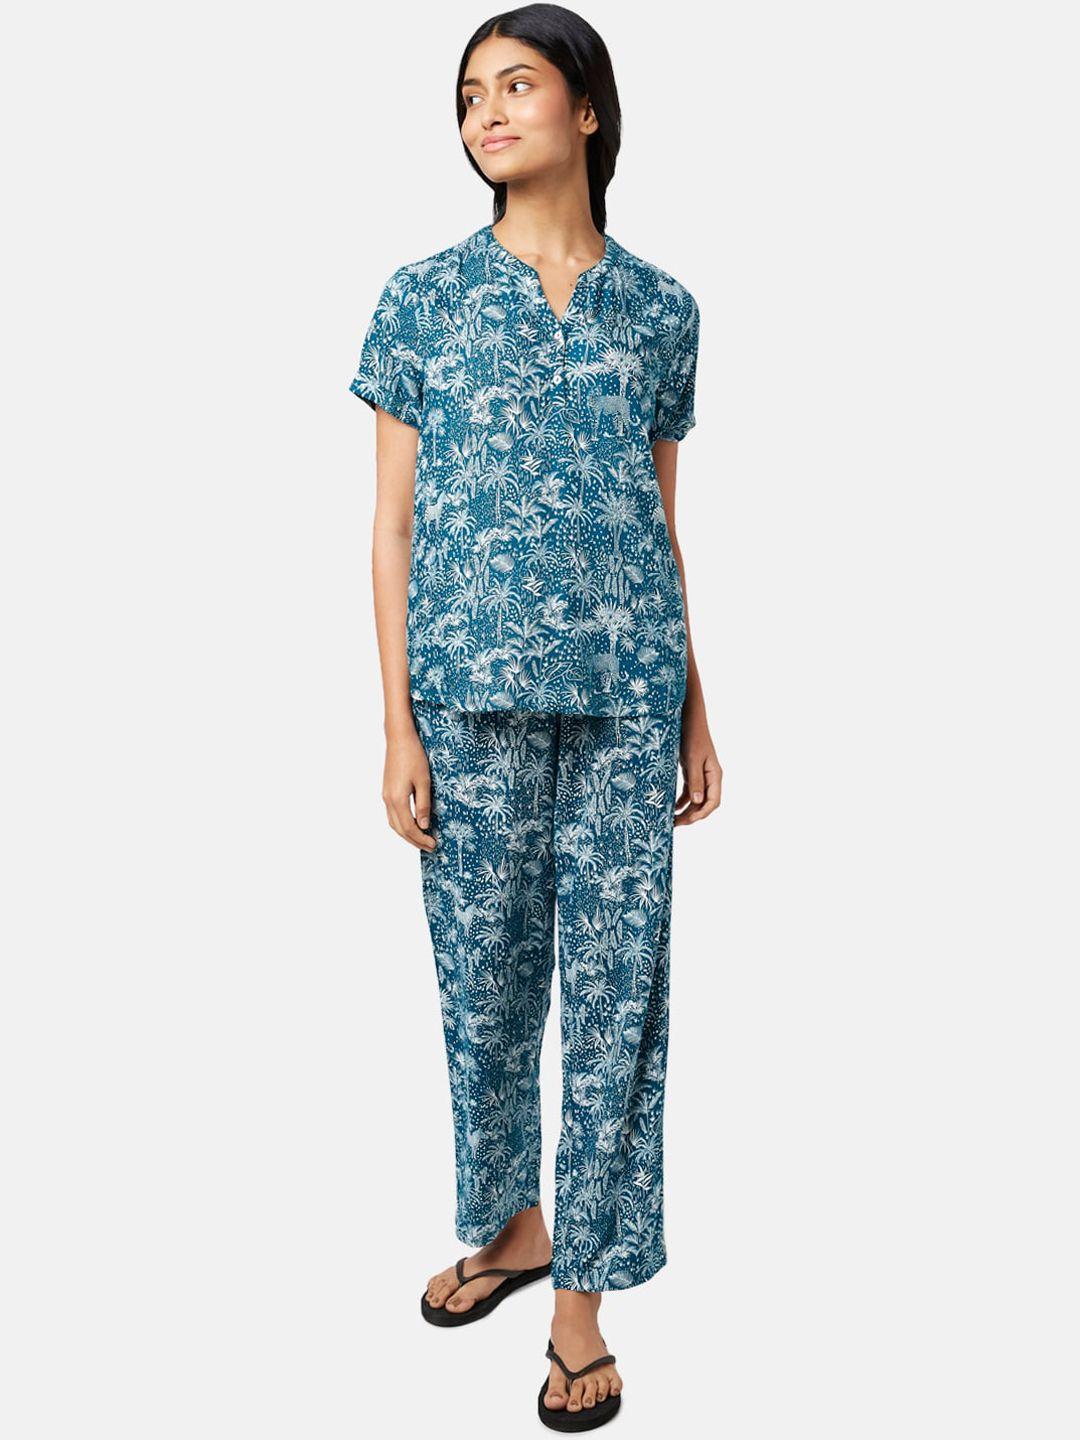 dreamz-by-pantaloons-women-printed-night-suit